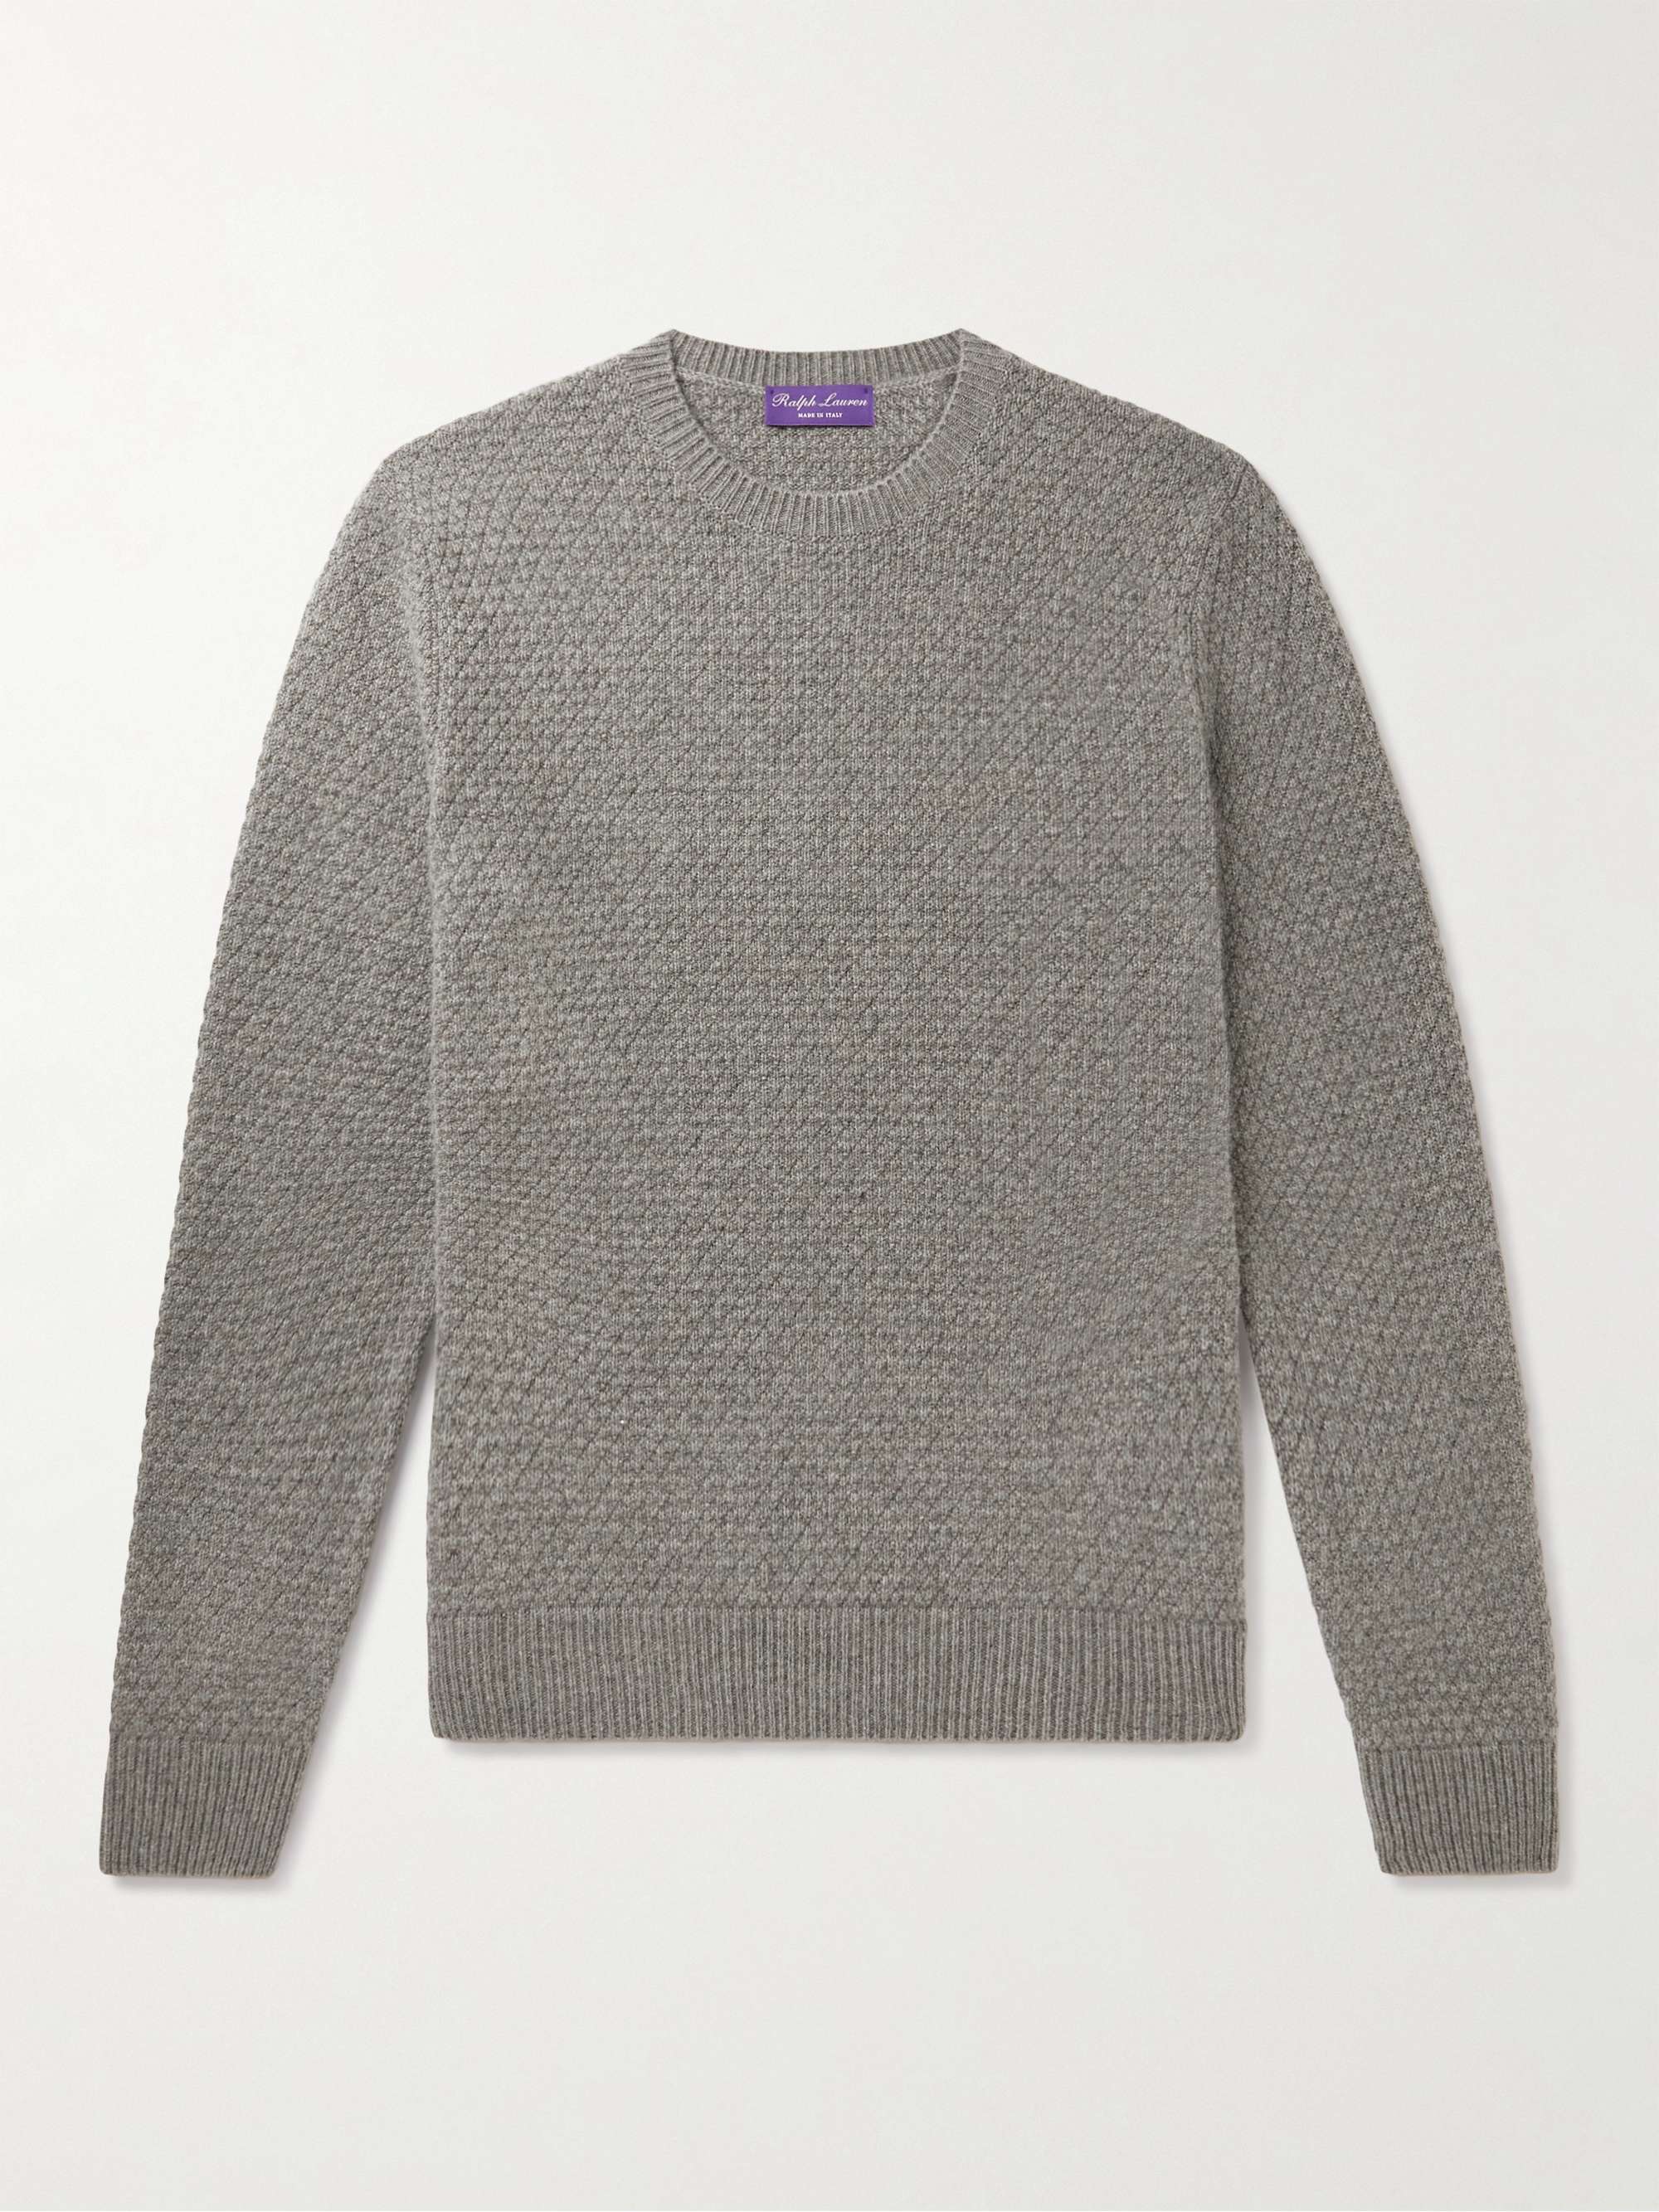 RALPH LAUREN PURPLE LABEL Honeycomb-Knit Cashmere Sweater | MR PORTER